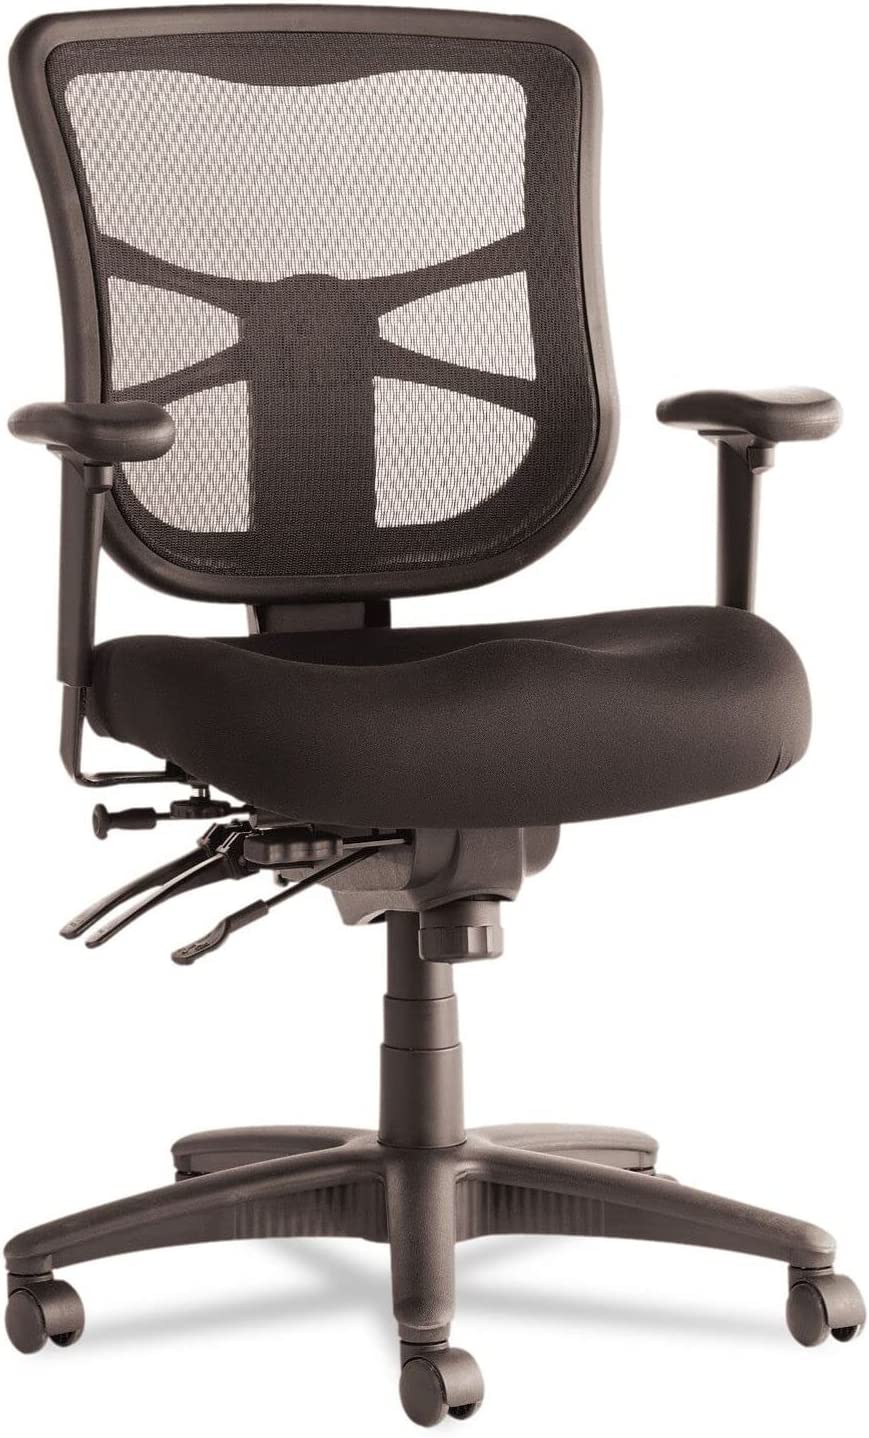 Alera Elusion Series Mesh Mid-Back Office Chair